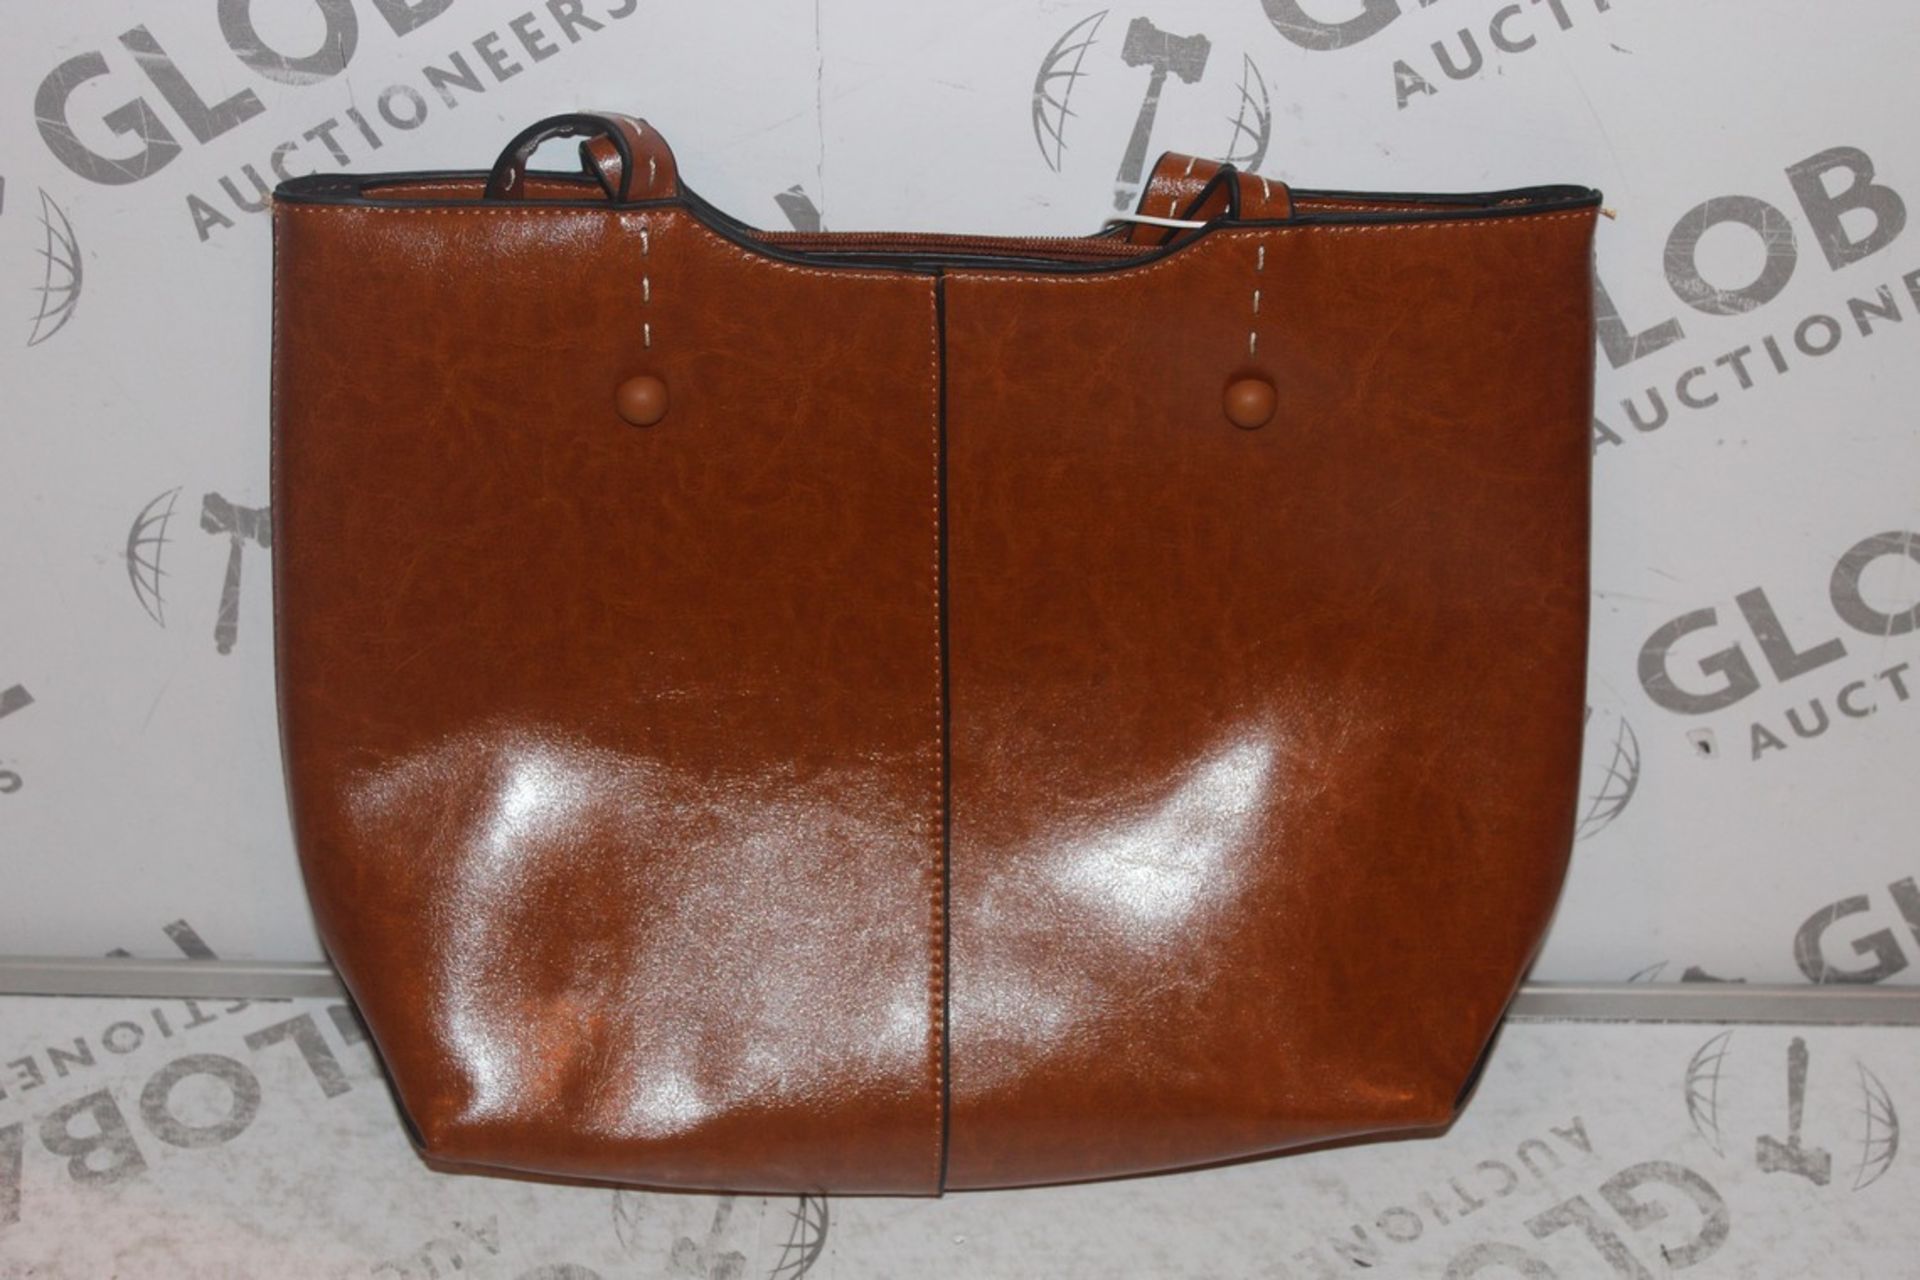 Brand New Women's Coolives Leather Tan Handbag RRP £44.99